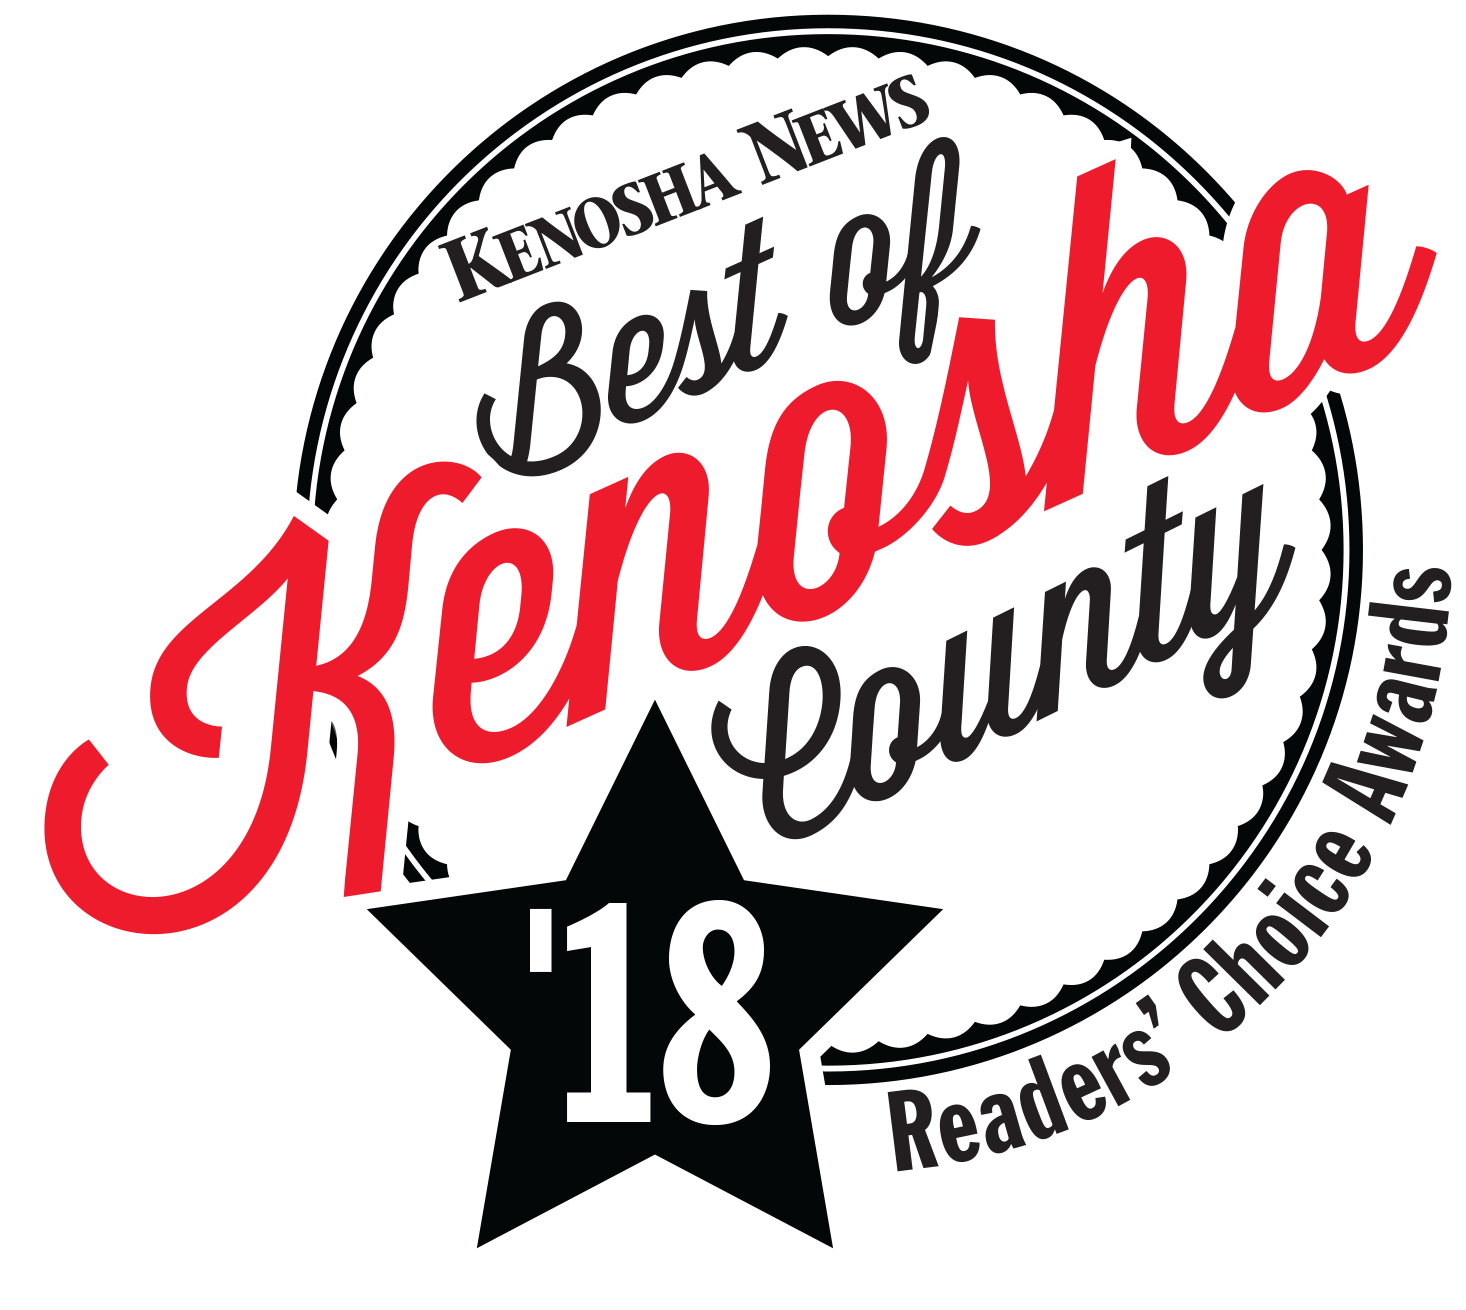 best of kenosha 2018, herberts jewelers, best jewelry shop in kenosha